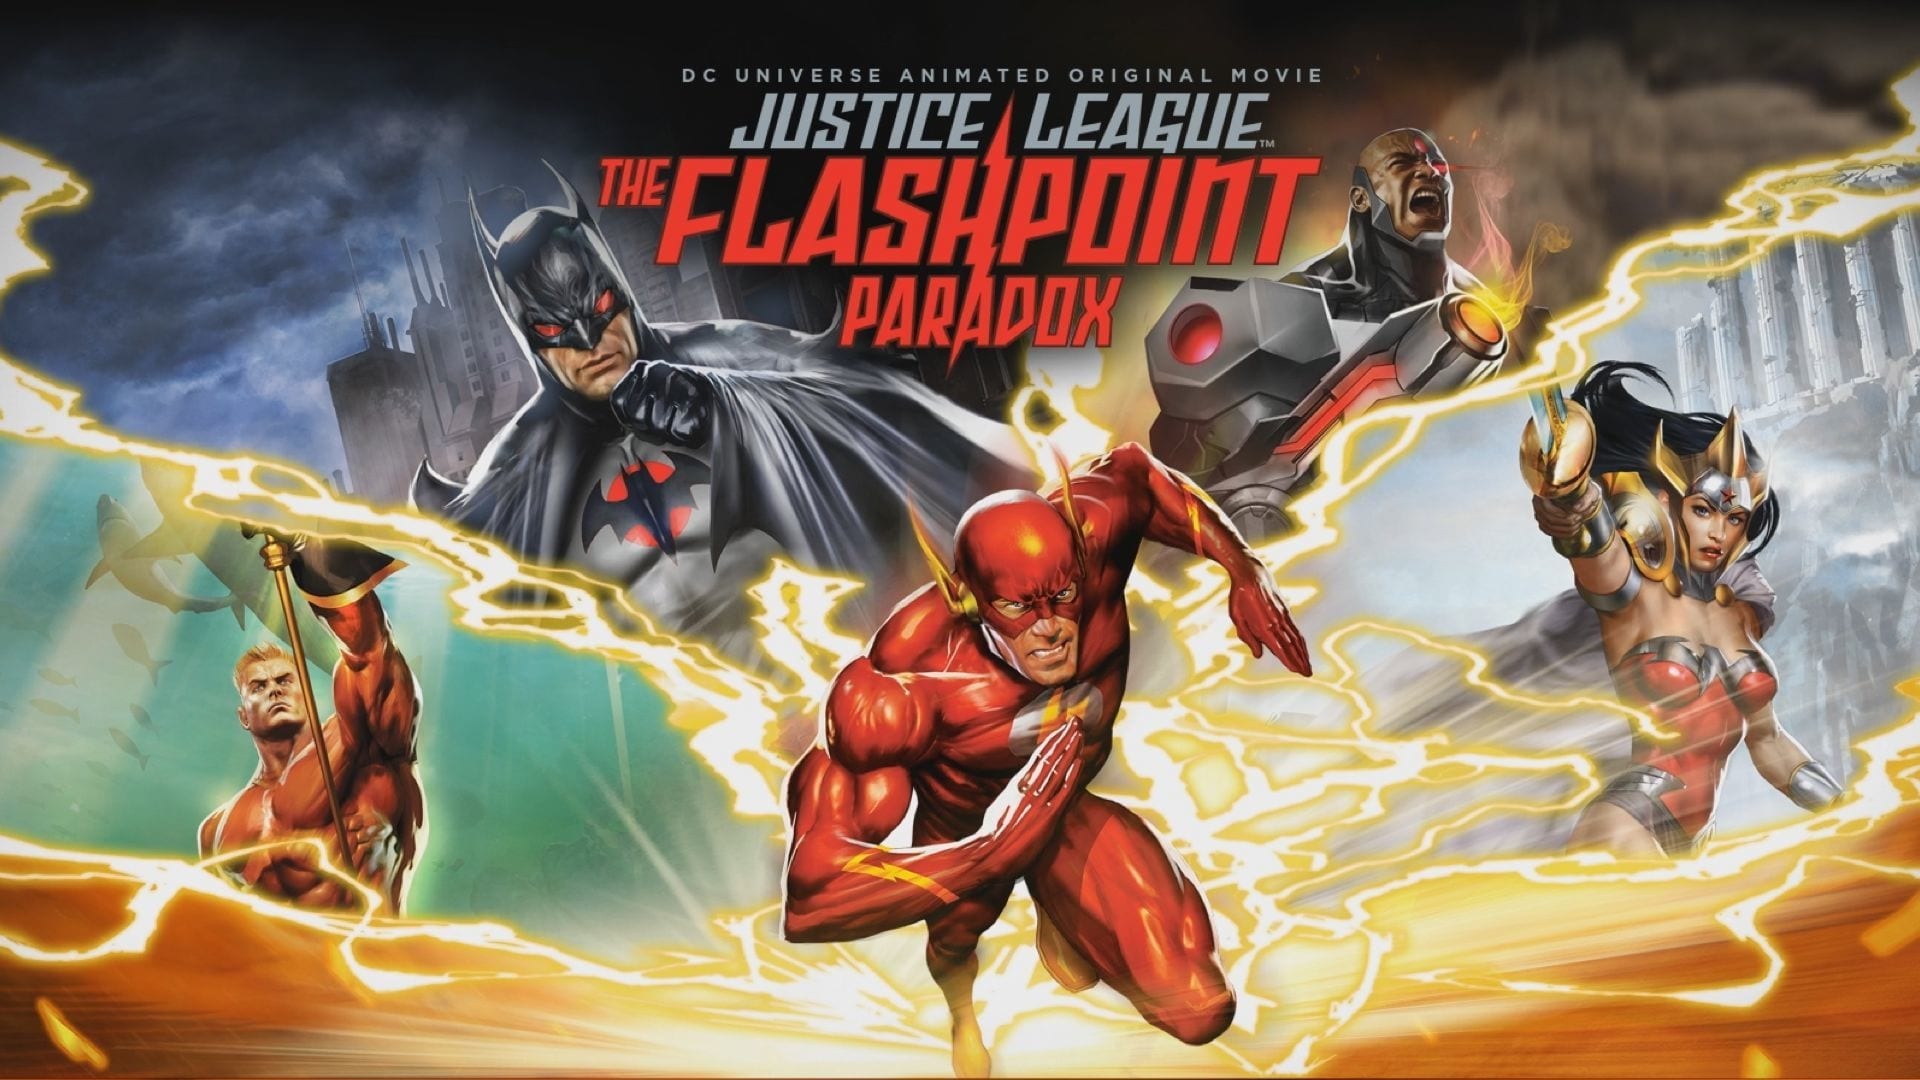 movie, justice league: the flashpoint paradox, aquaman, barry allen, batman, cyborg (dc comics), diana of themyscira, flash, justice league, thomas wayne, wonder woman